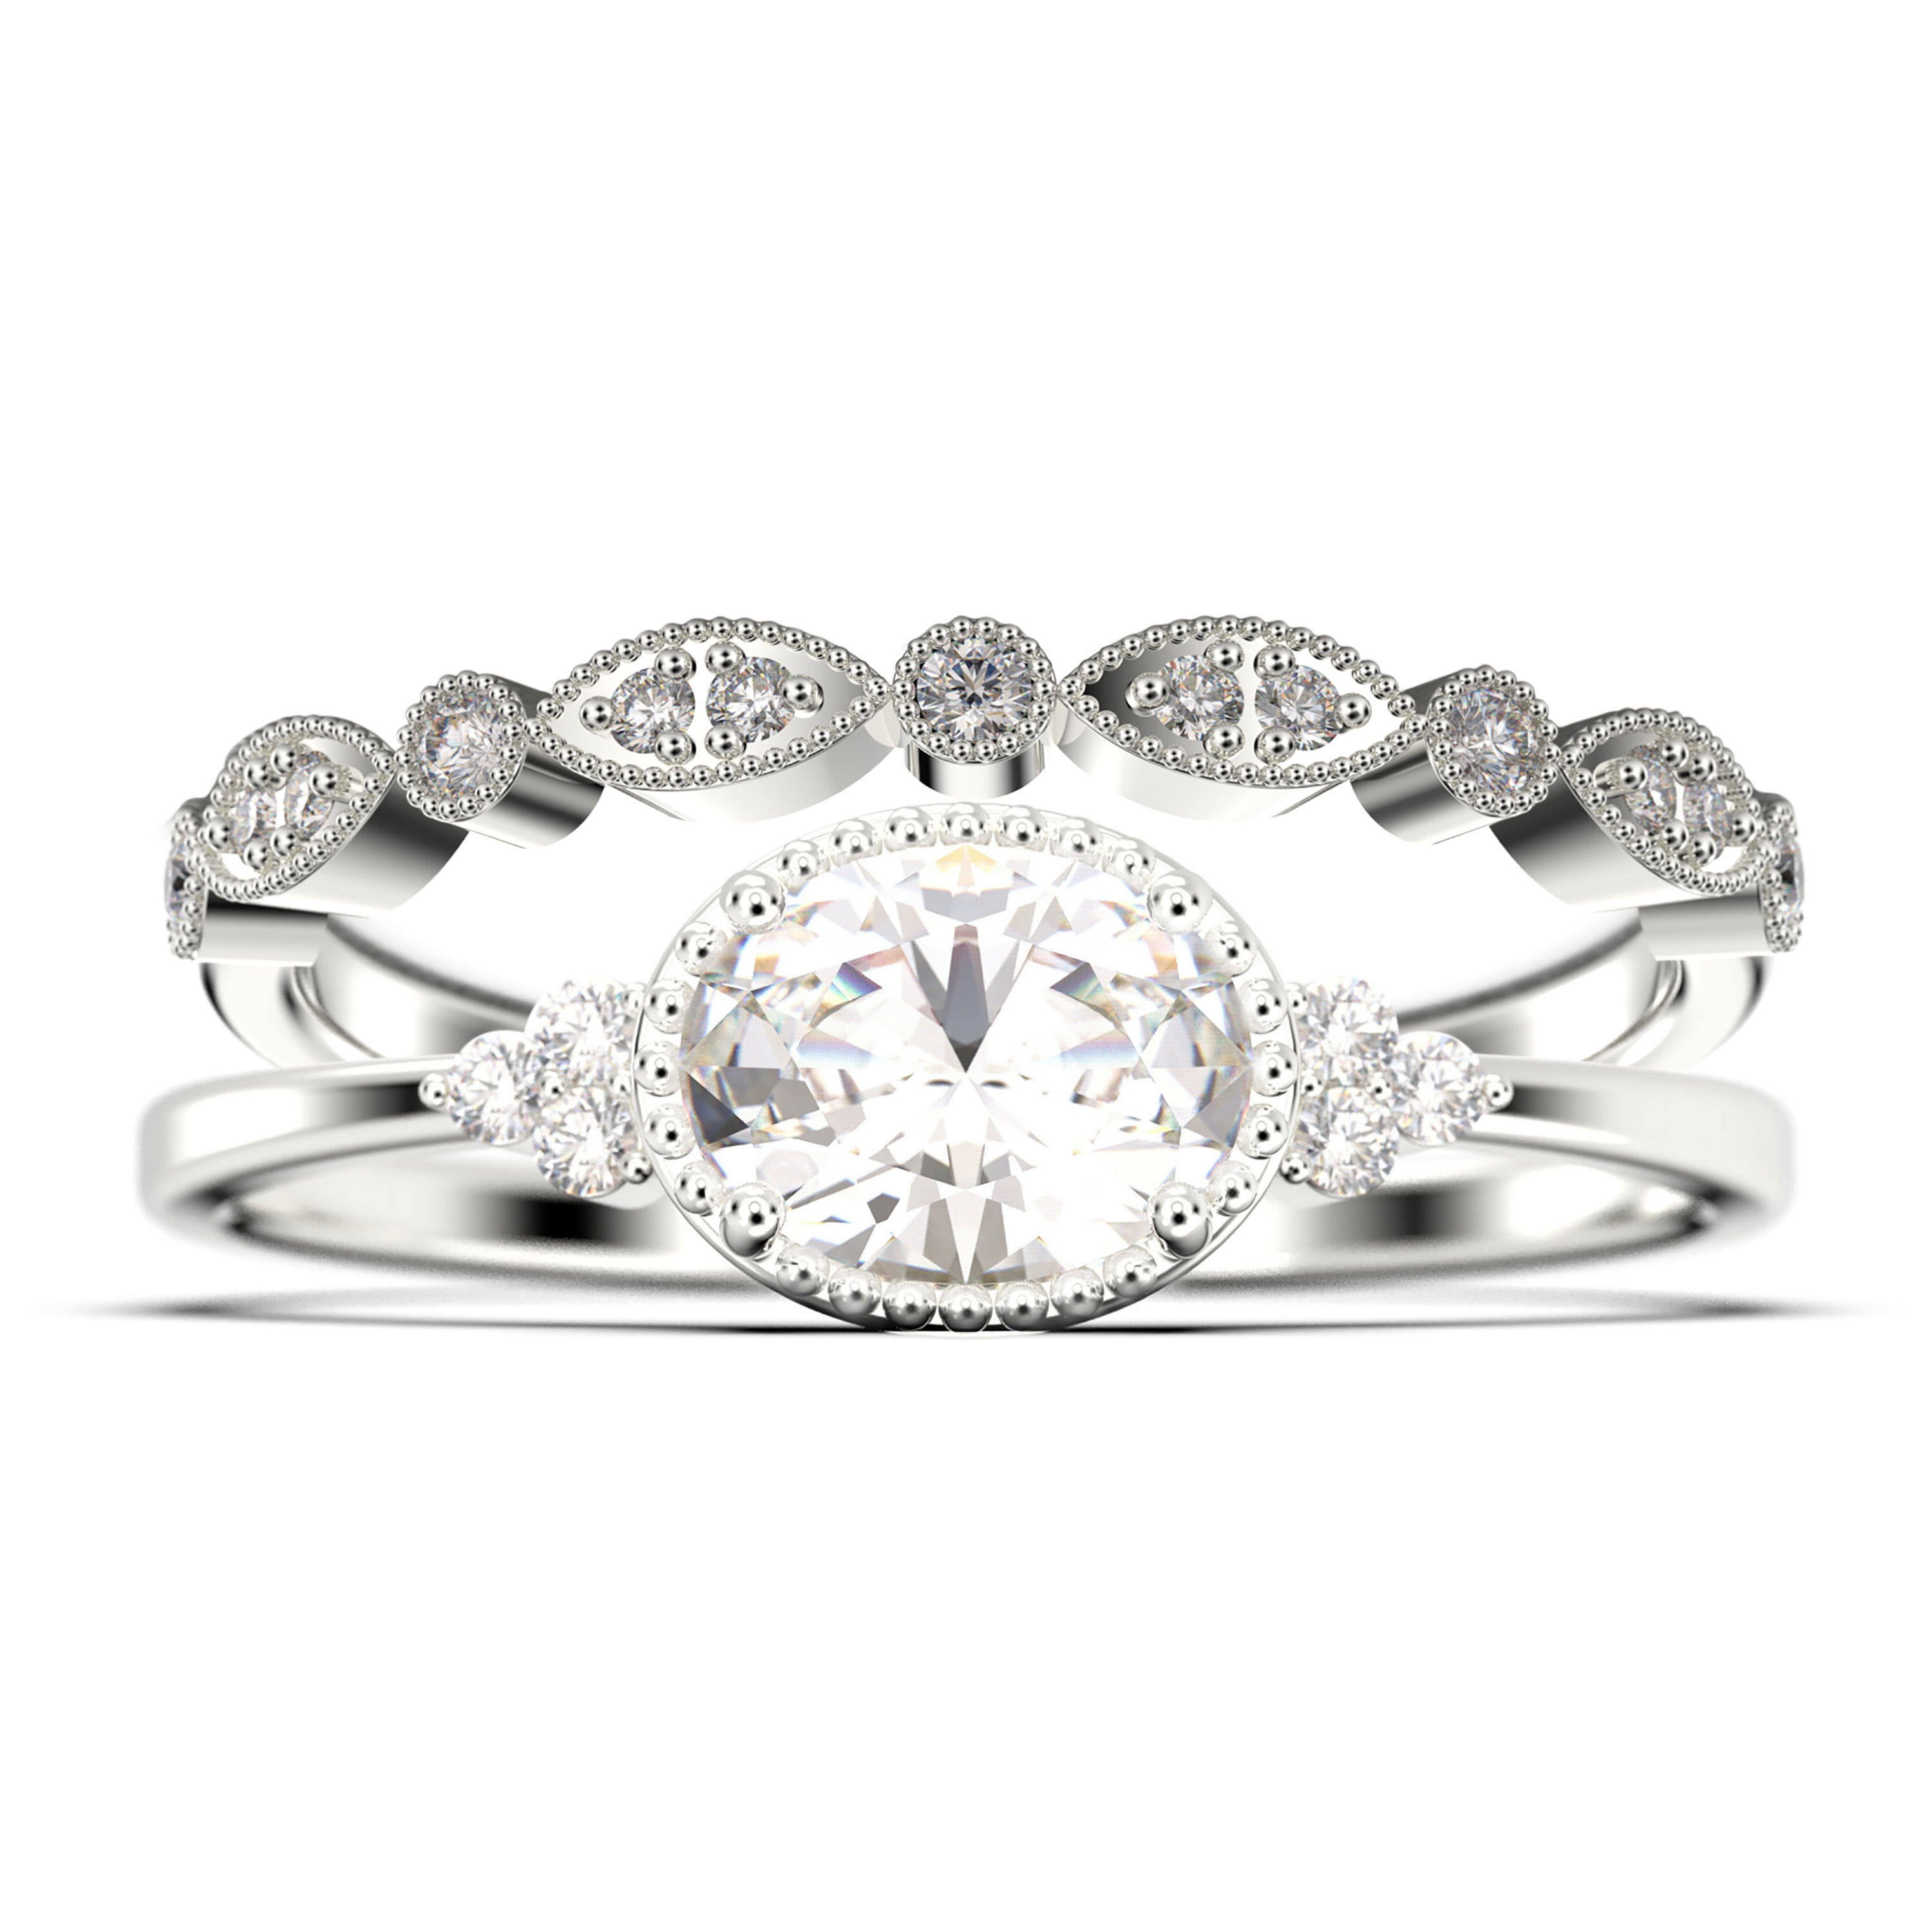 Details about   1.25 Ct Oval Brilliant Cut Diamond Engagement Ring Silver VVS1/D 